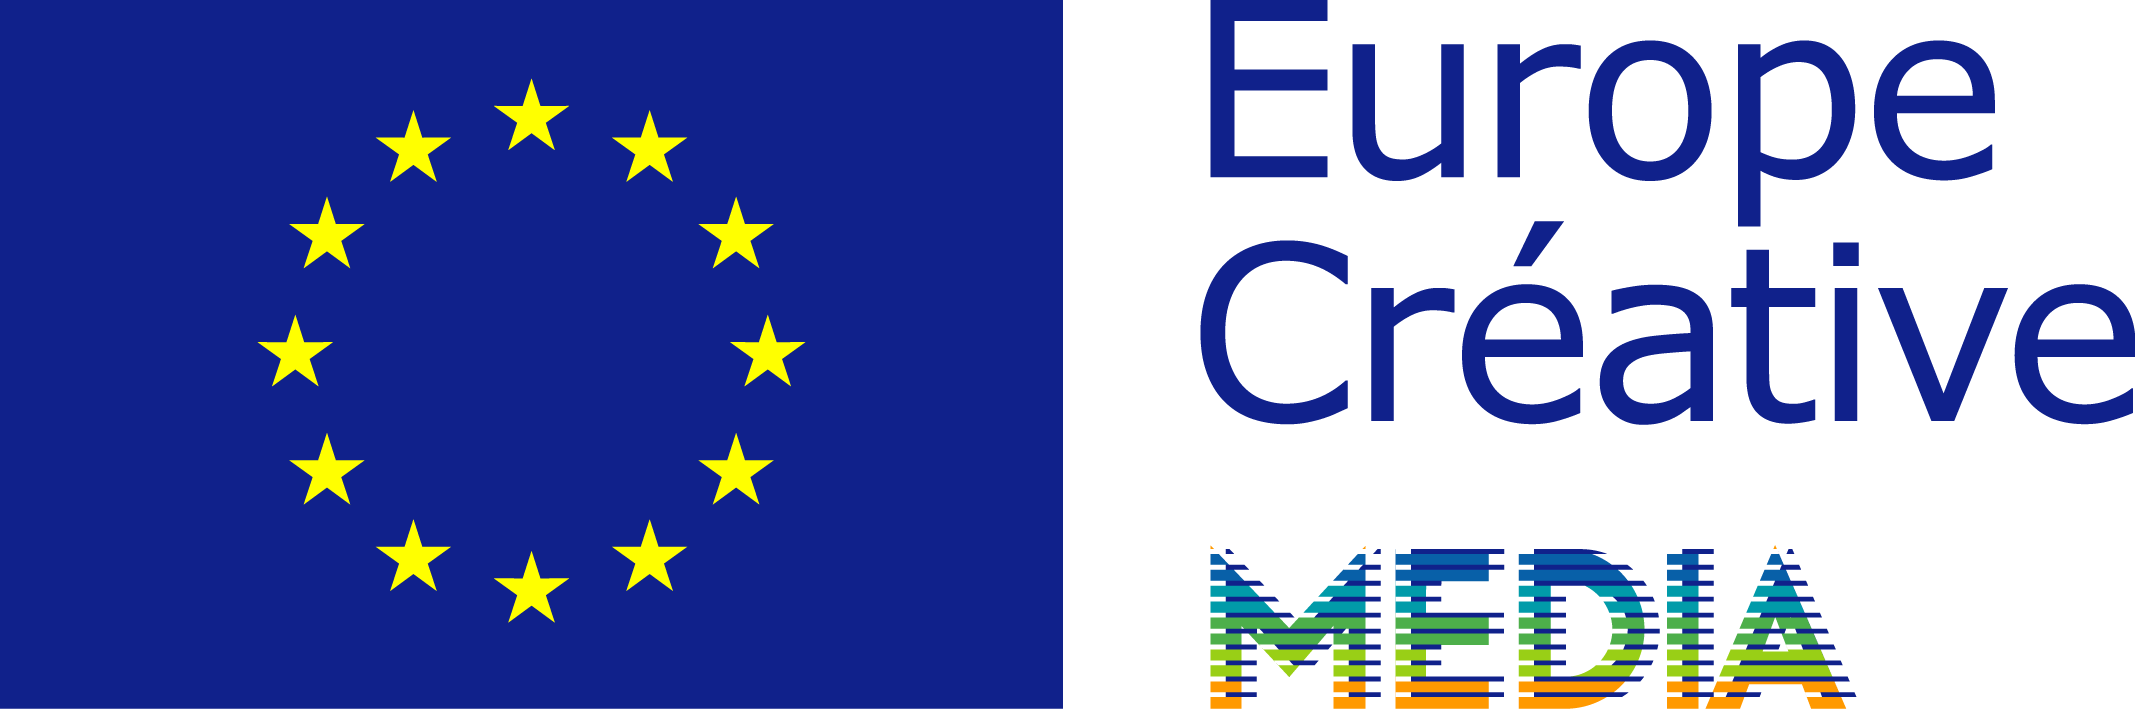 EU Flag + Europe Creative Media